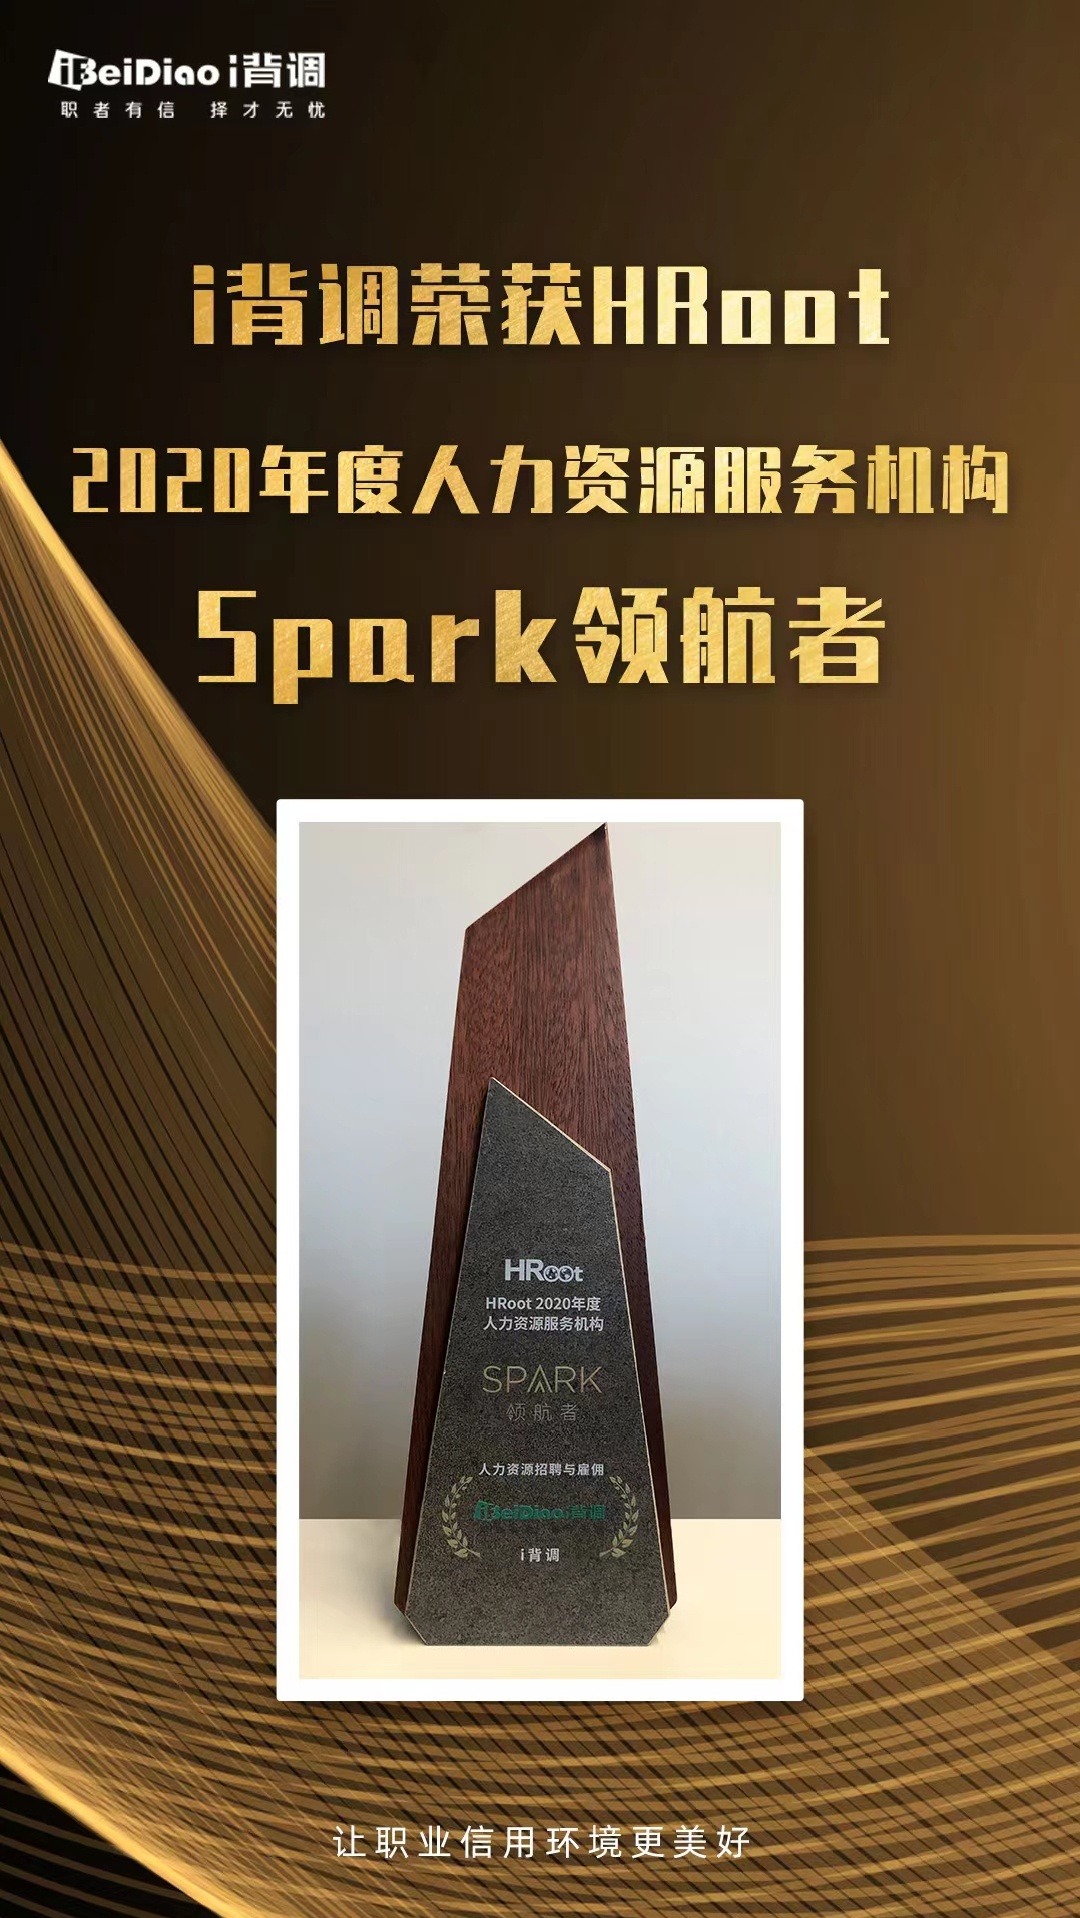  i背调荣获“HRoot 2020年度人力资源服务机构Spark 领航者”奖